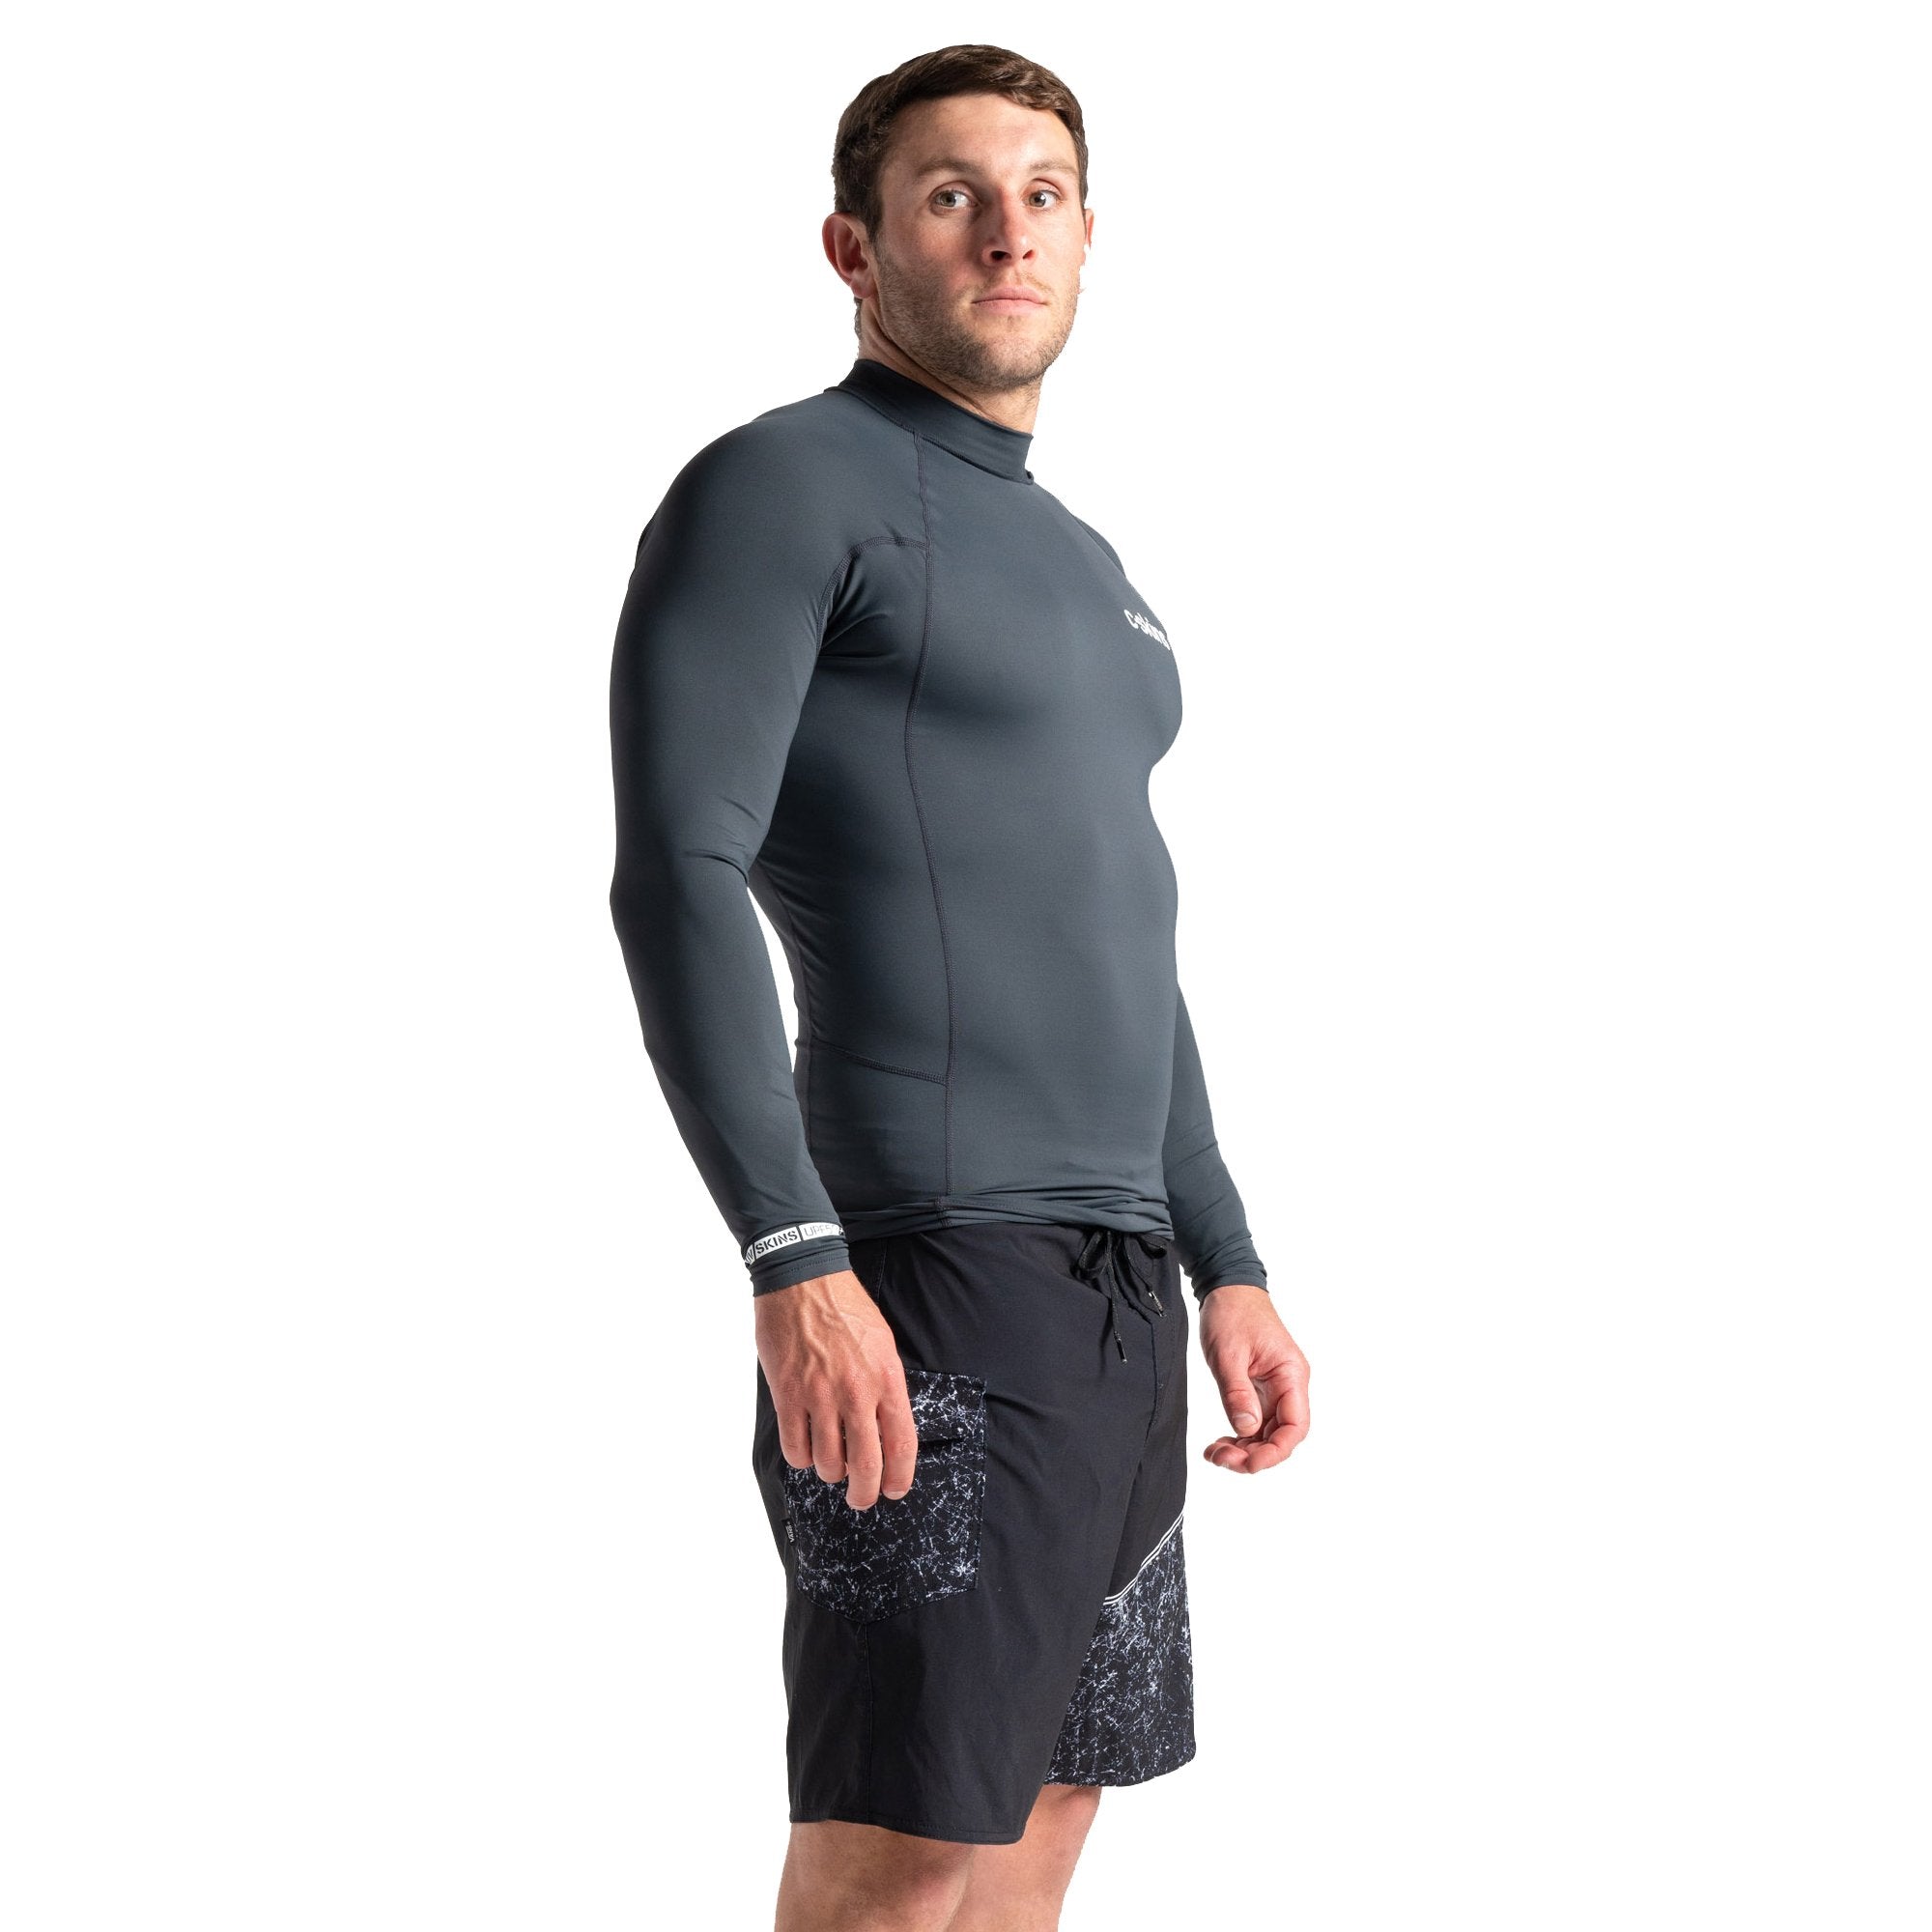 C-Skins UV Skins Men's Long Sleeve Crew Neck Rash Vest in Anthracite - Right side